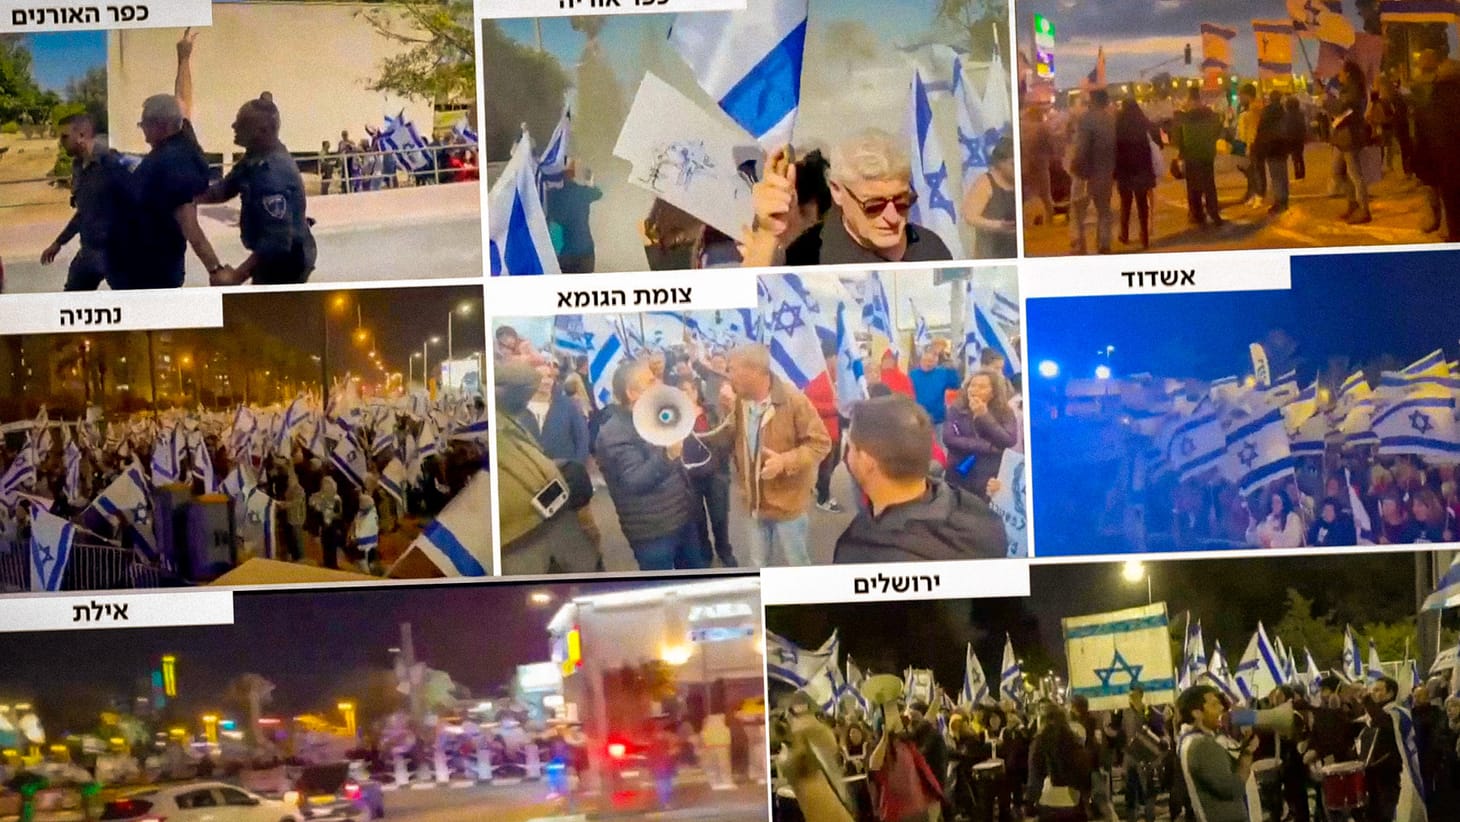 What’s Happening in Israel?